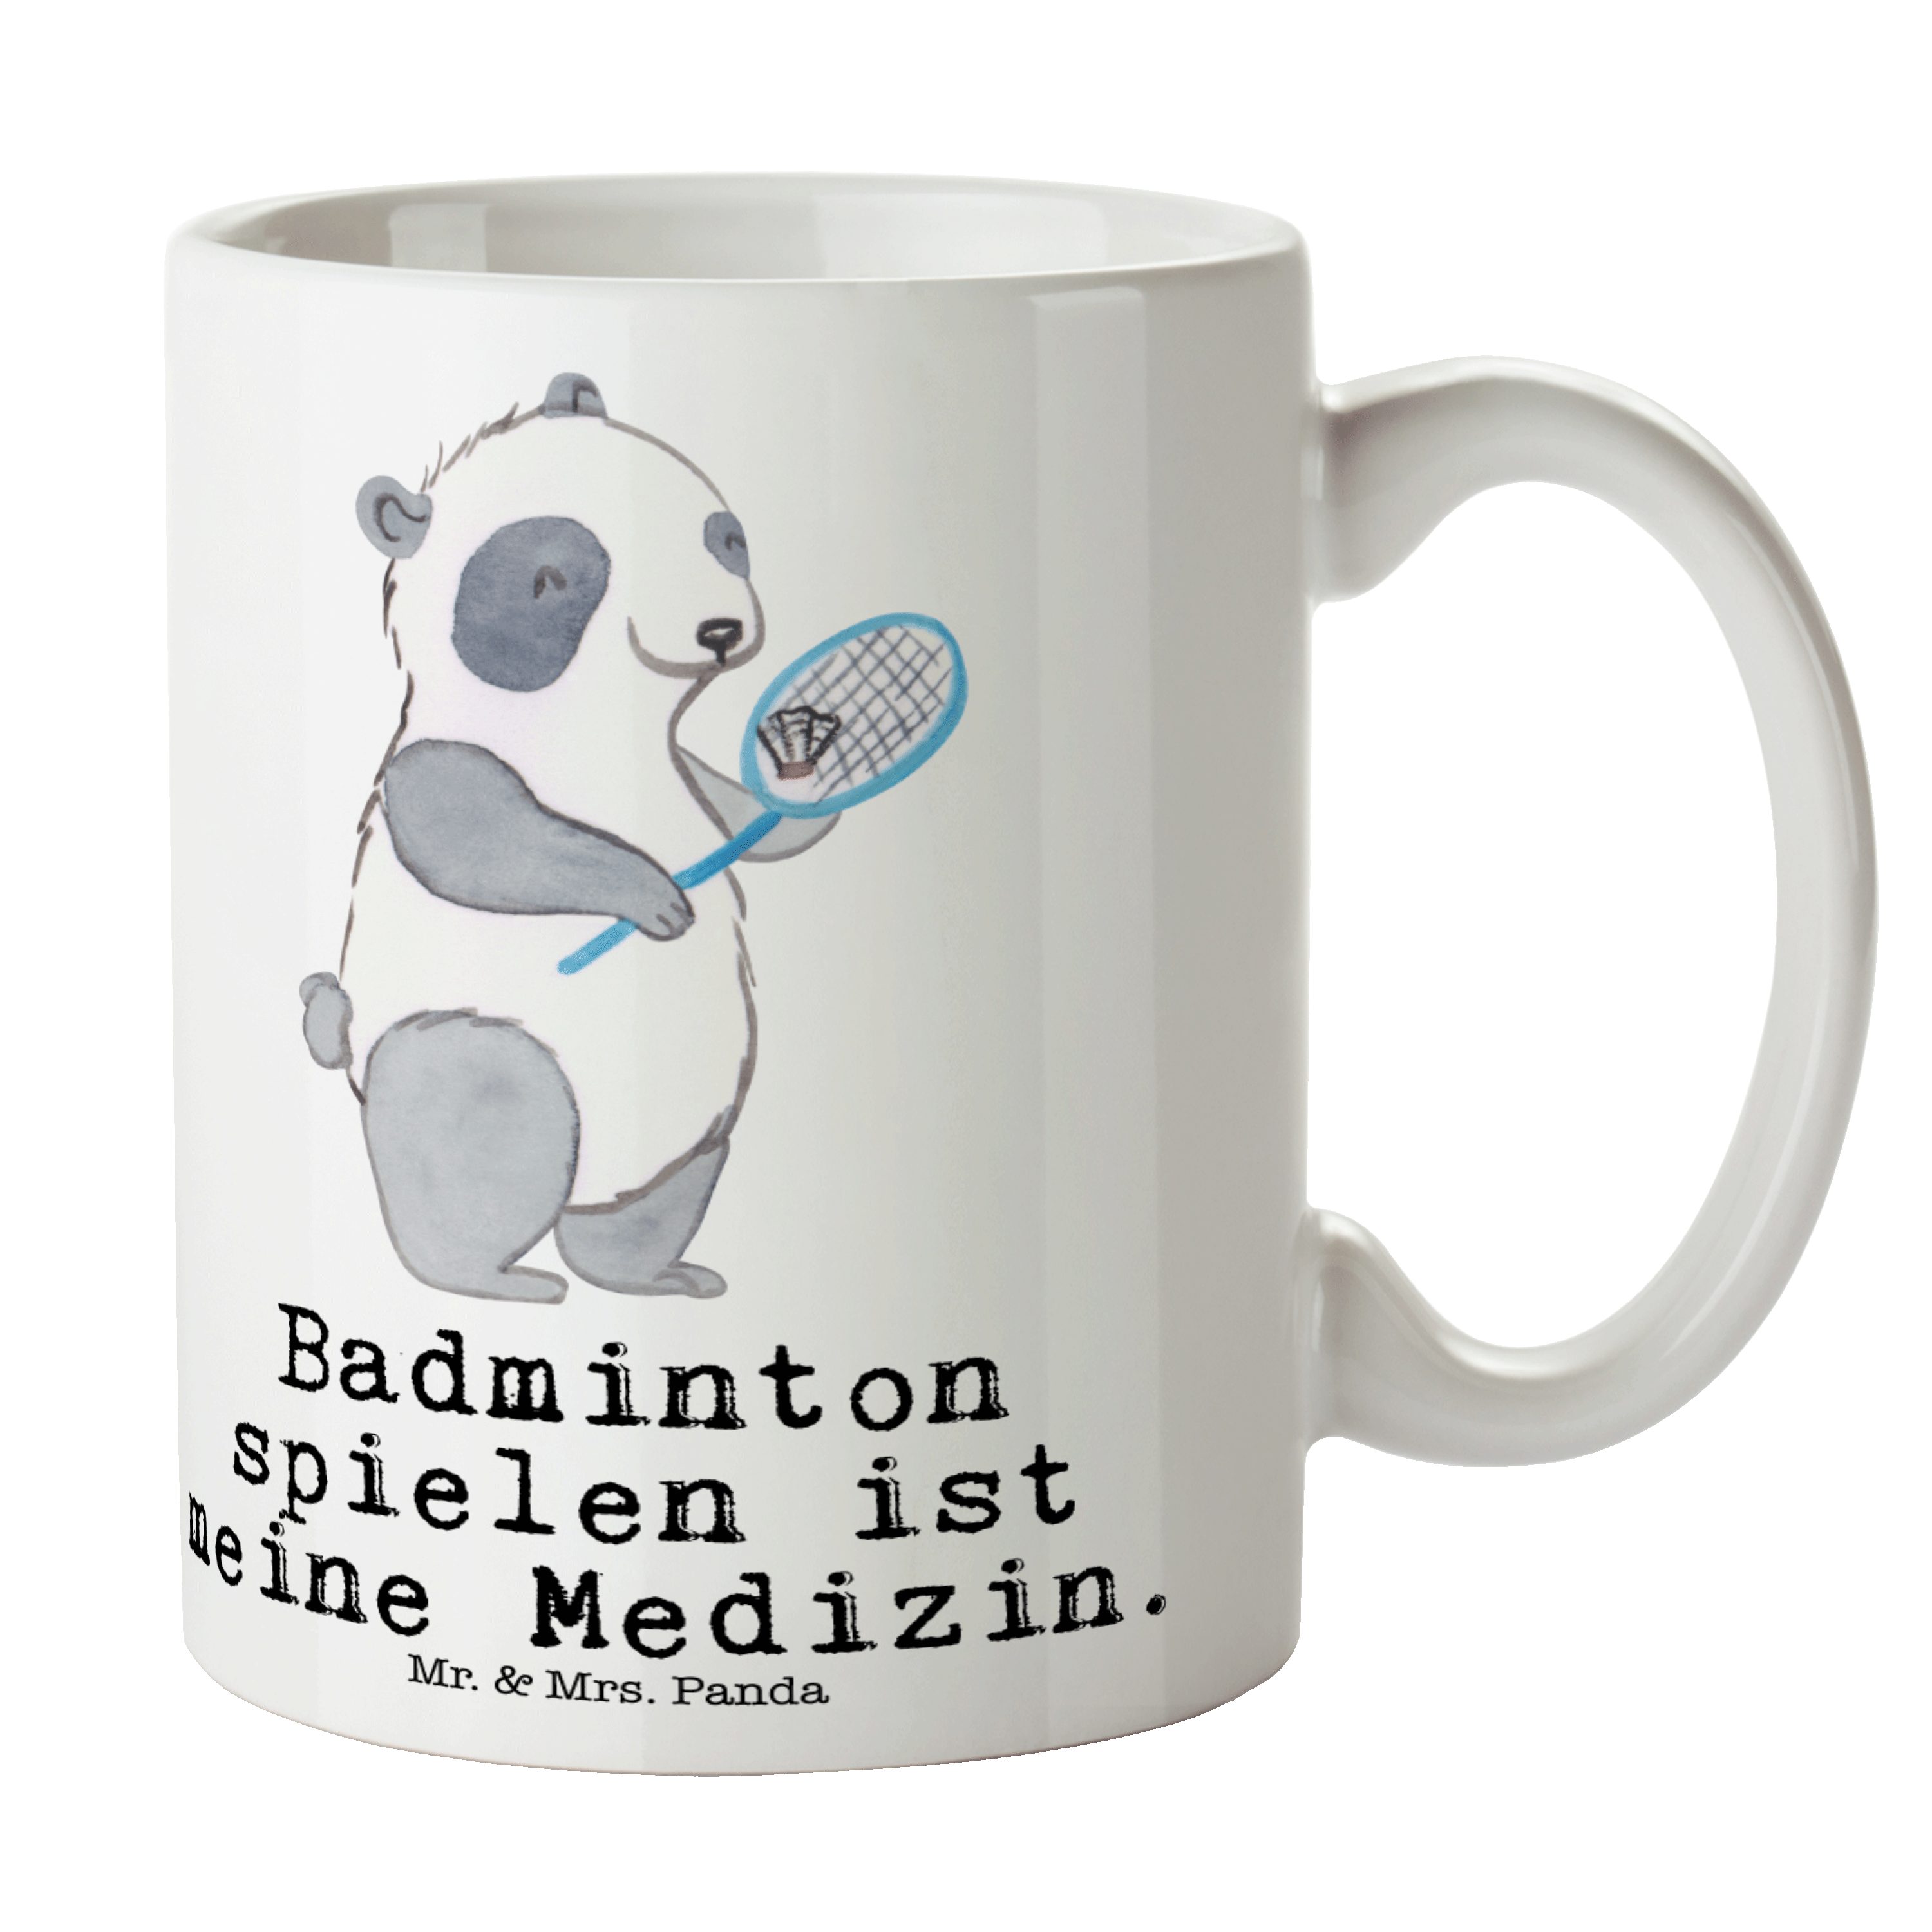 Mr. & Mrs. Panda Tasse Panda Badminton Medizin - Weiß - Geschenk, Dankeschön, Kaffeebecher, Keramik